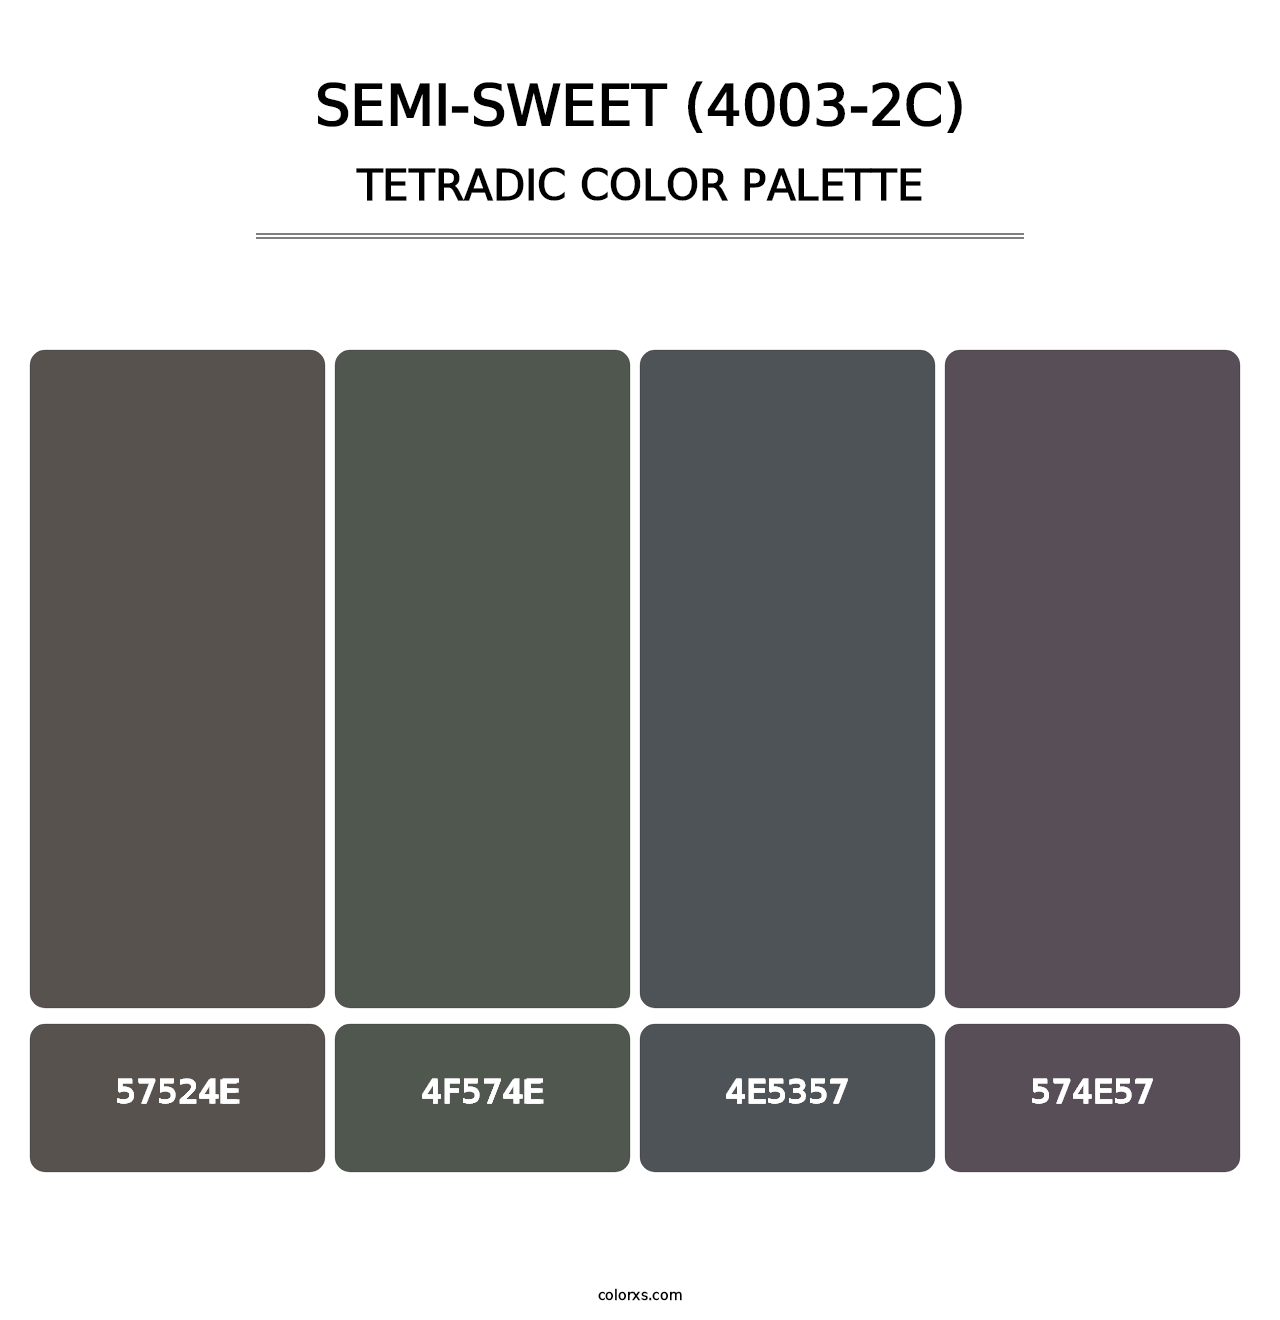 Semi-Sweet (4003-2C) - Tetradic Color Palette